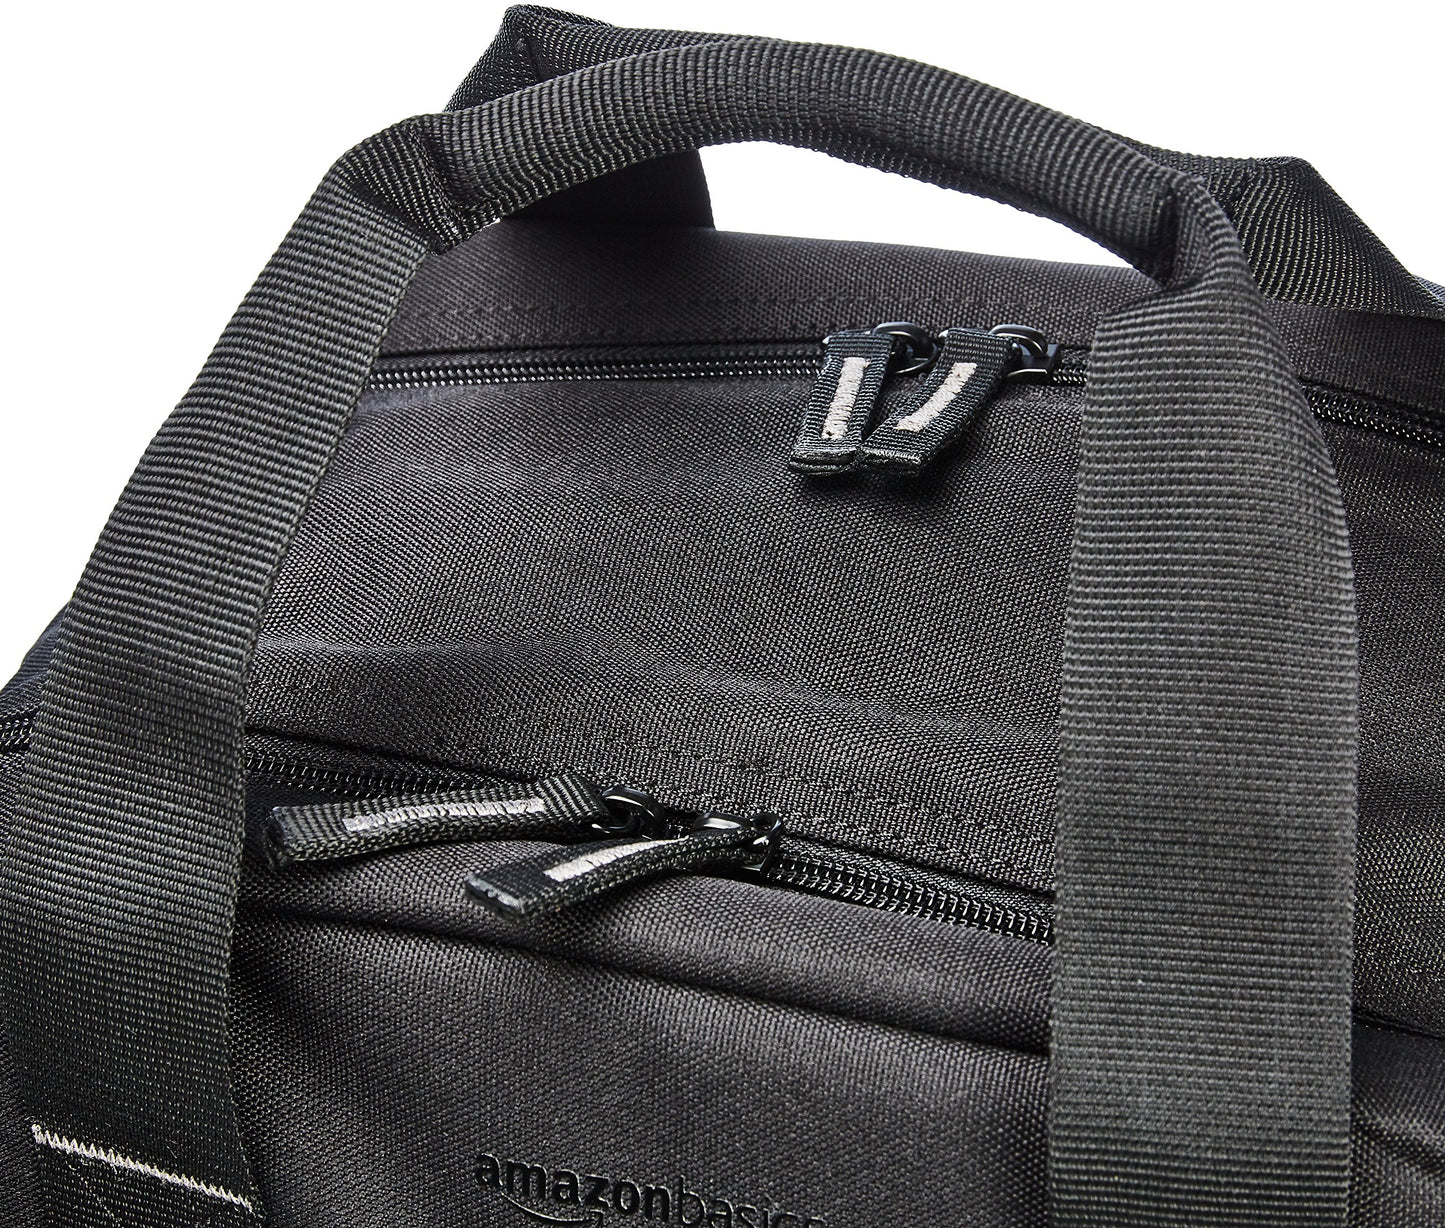 Amazon Basics Durable, Padded Tool Bag Backpack, Black - 75 Pocket